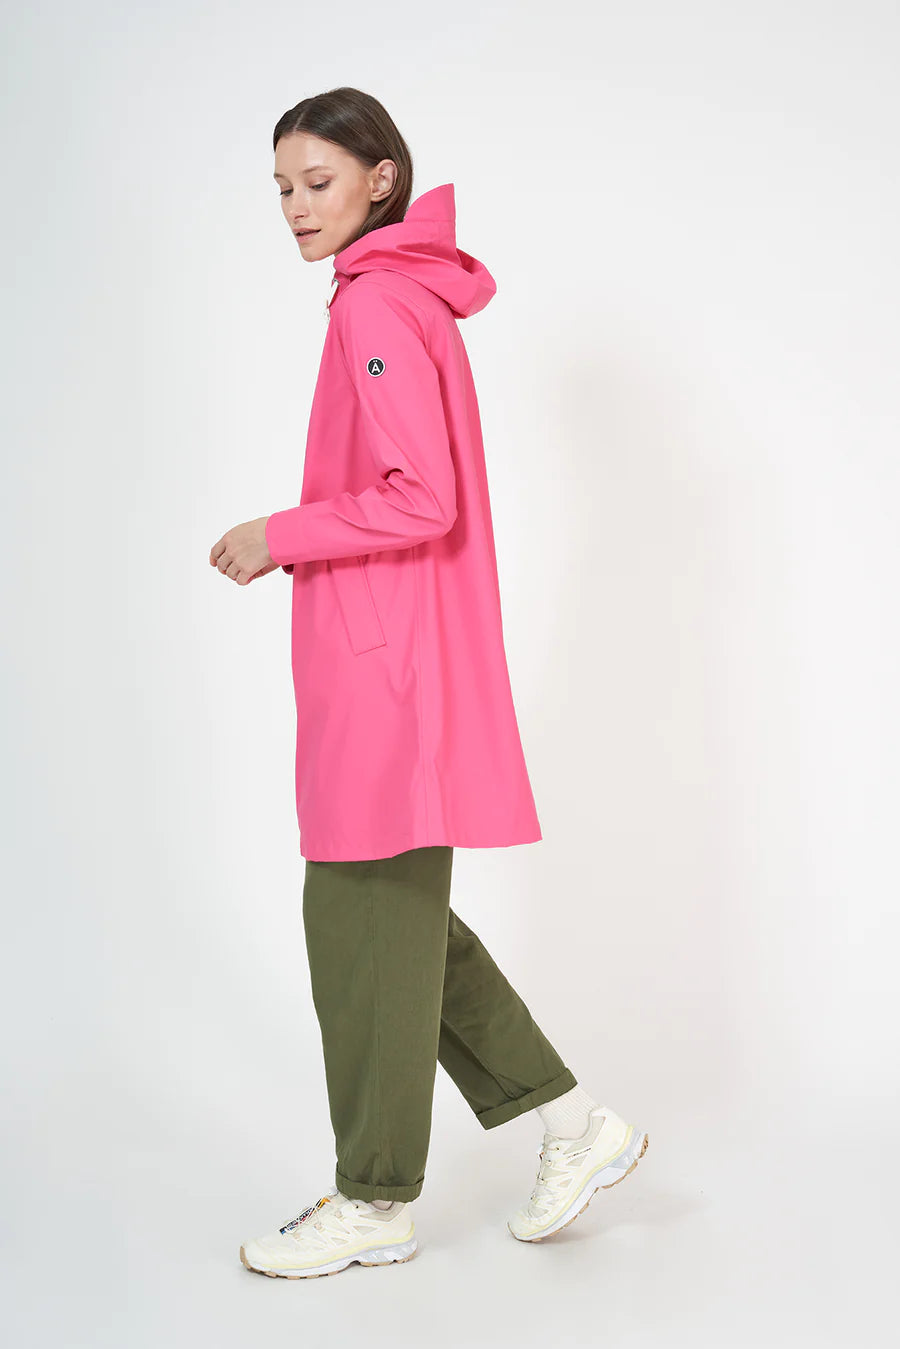 Tanta - Nuovola Raincoat In Hot Pink